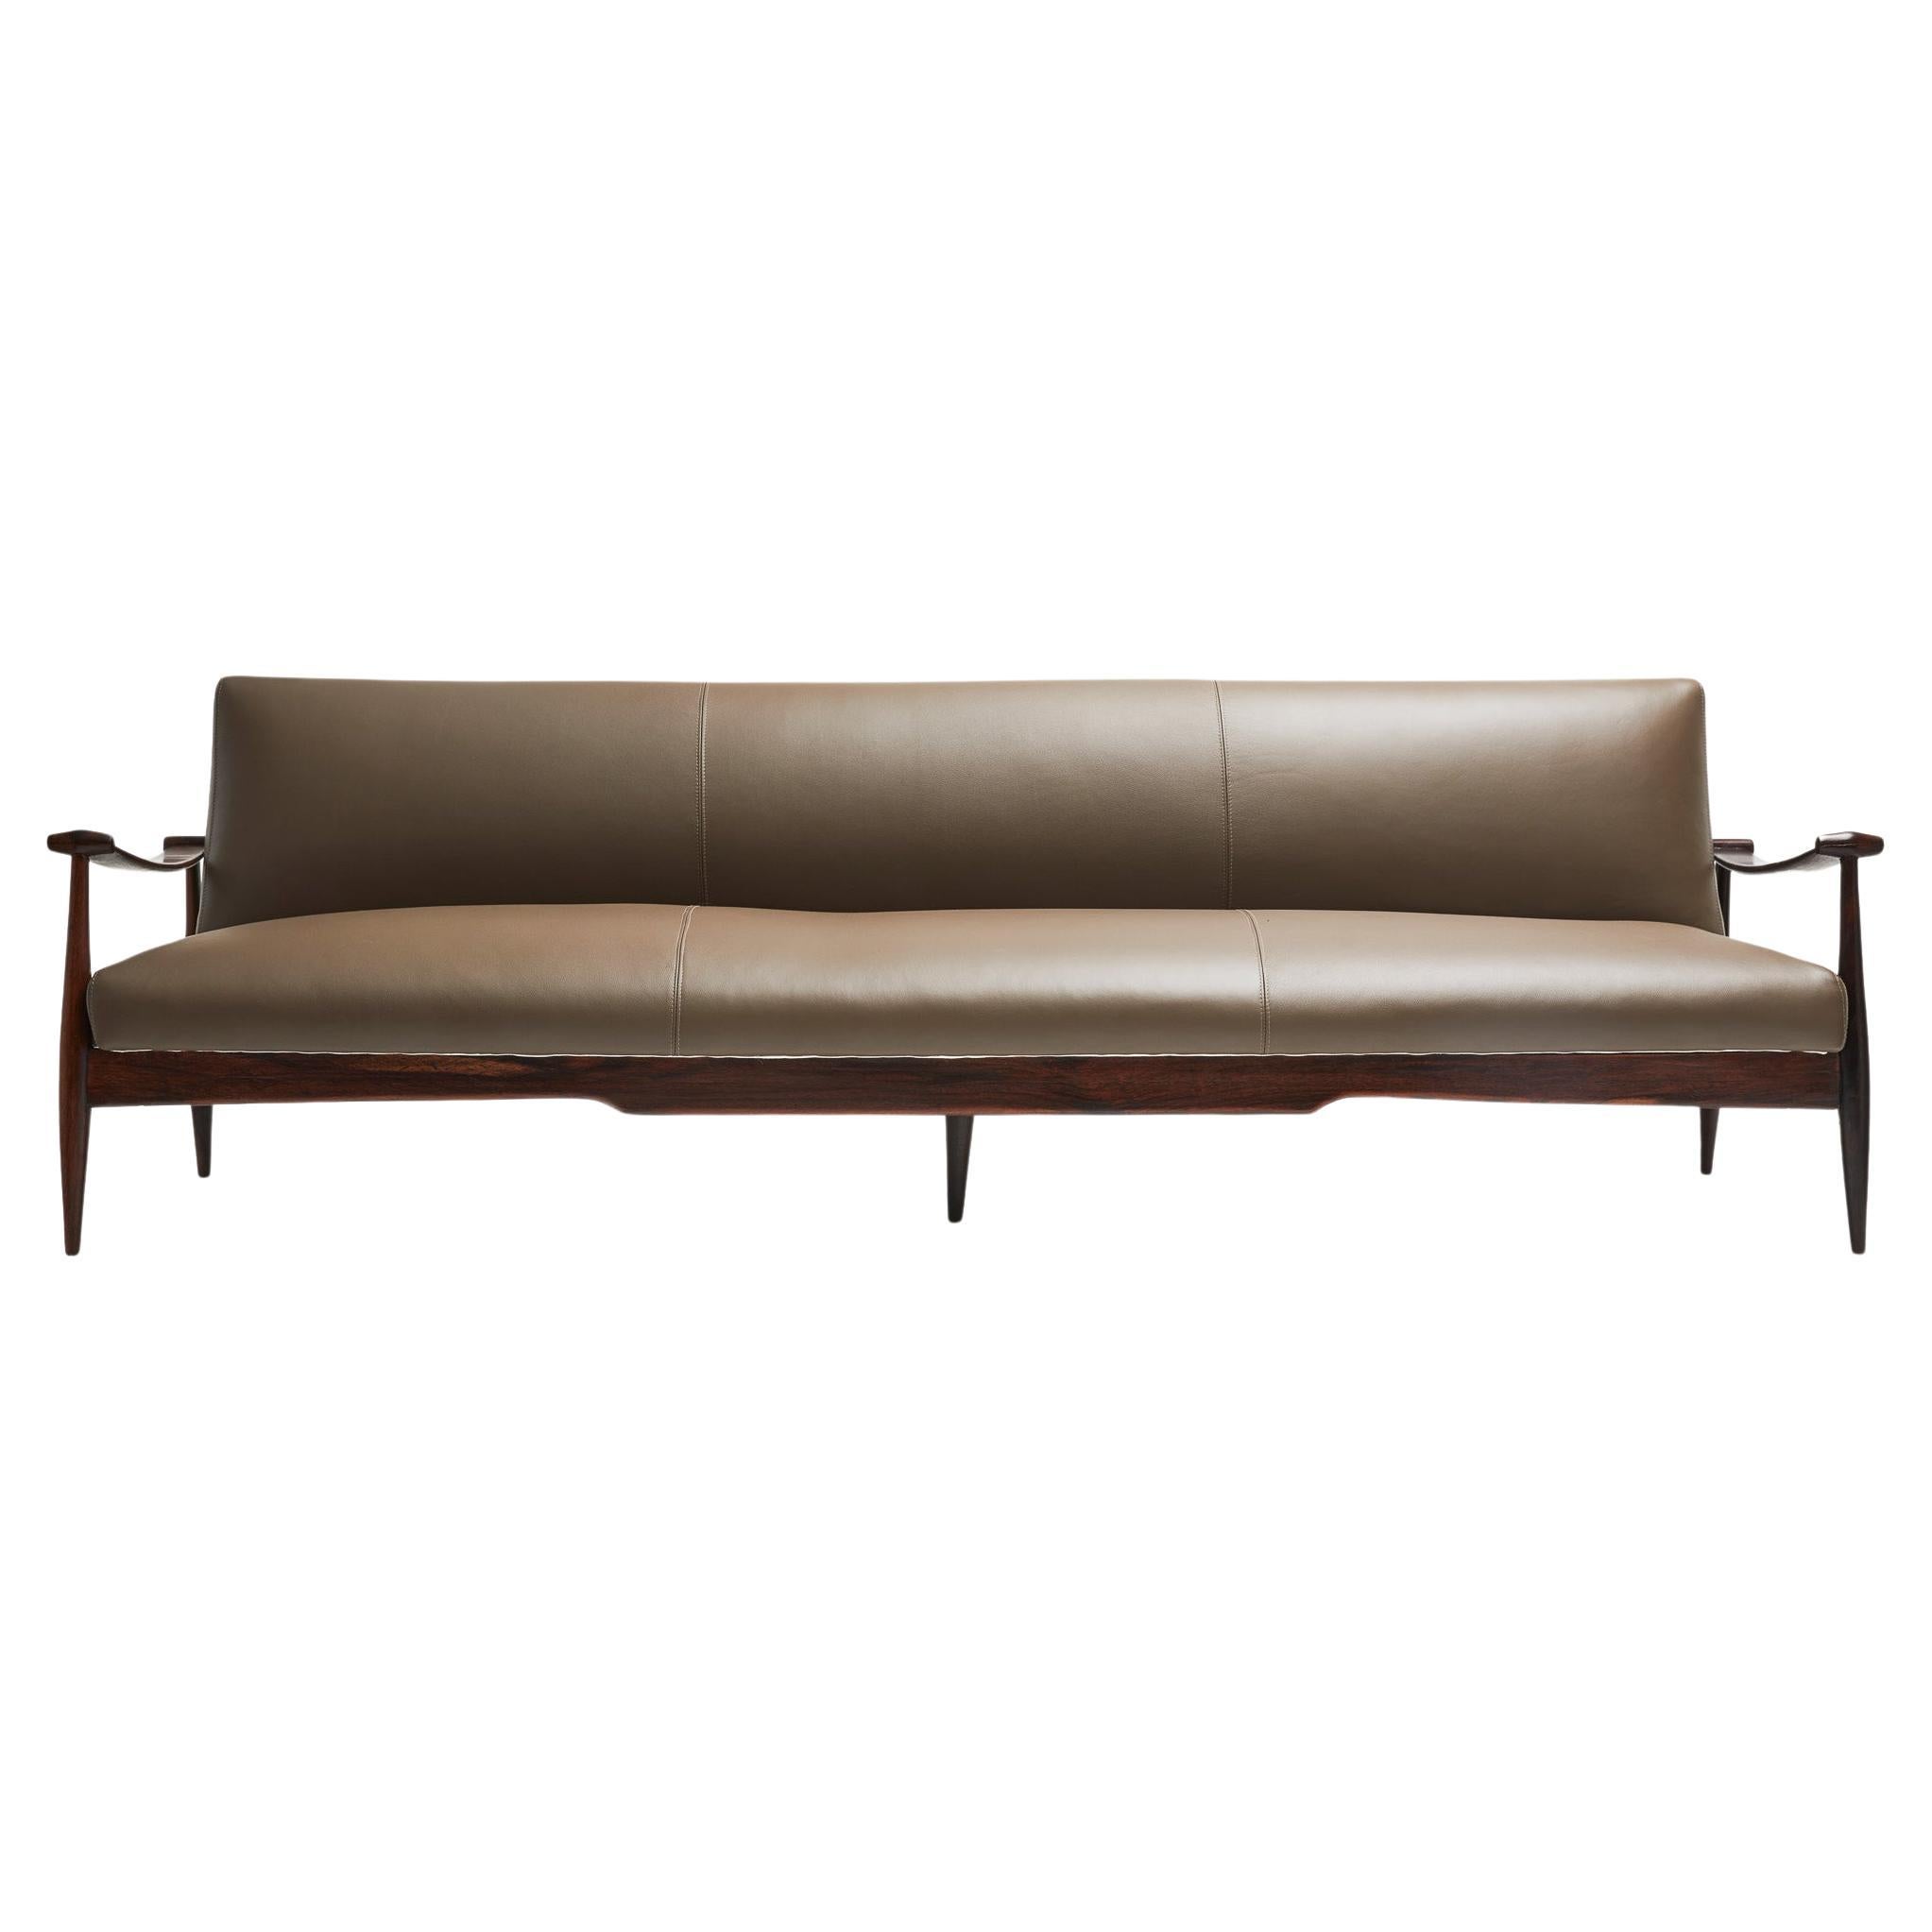 Brazilian Modern Sofa in Hardwood & Brown Leather by Liceu De Artes 1960